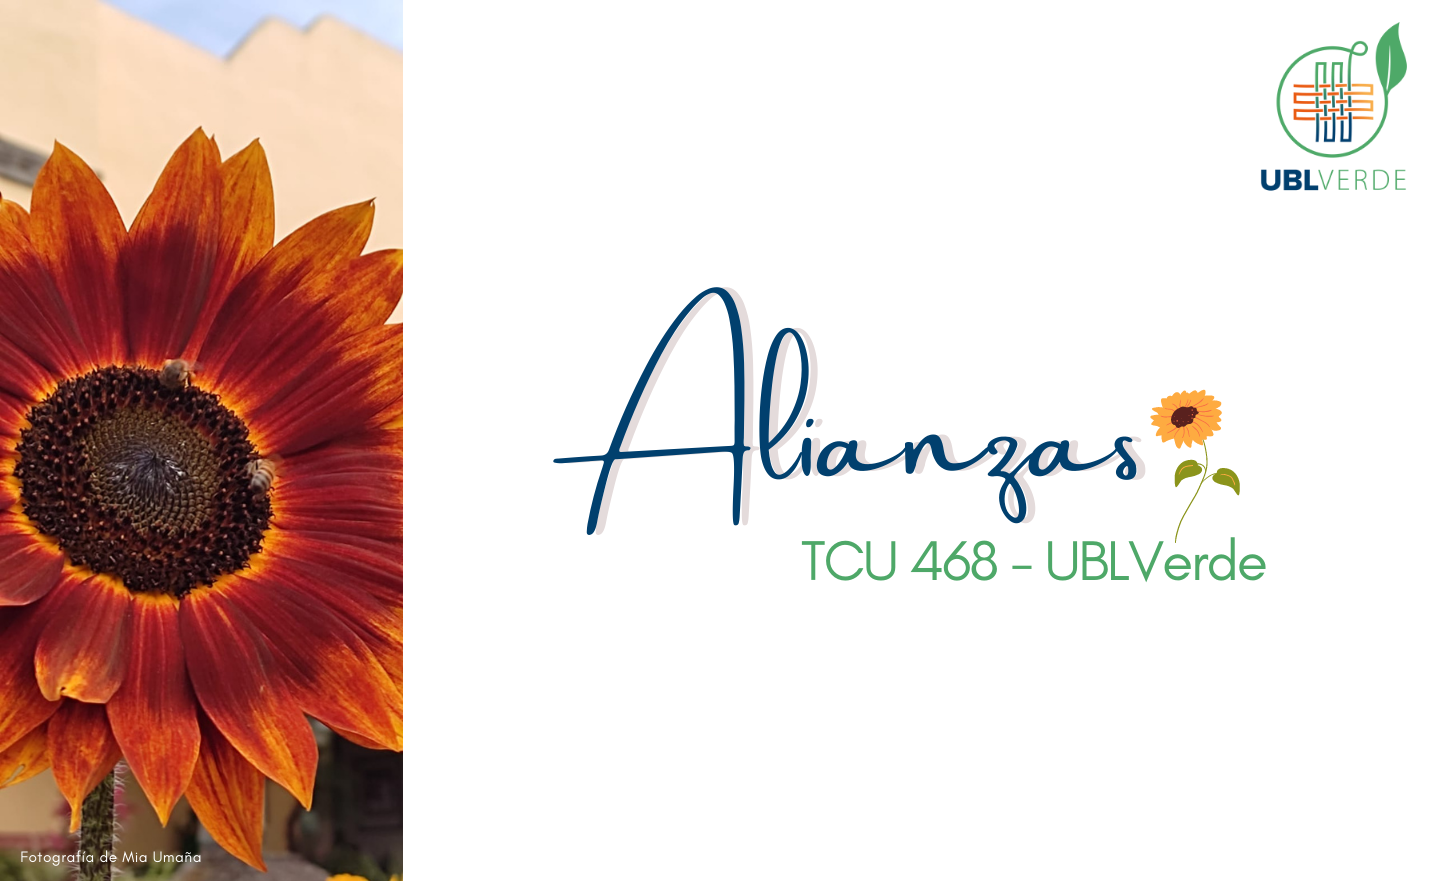 Alianzas: TCU-468 Agricultura Orgánica Urbana, CIA-UCR